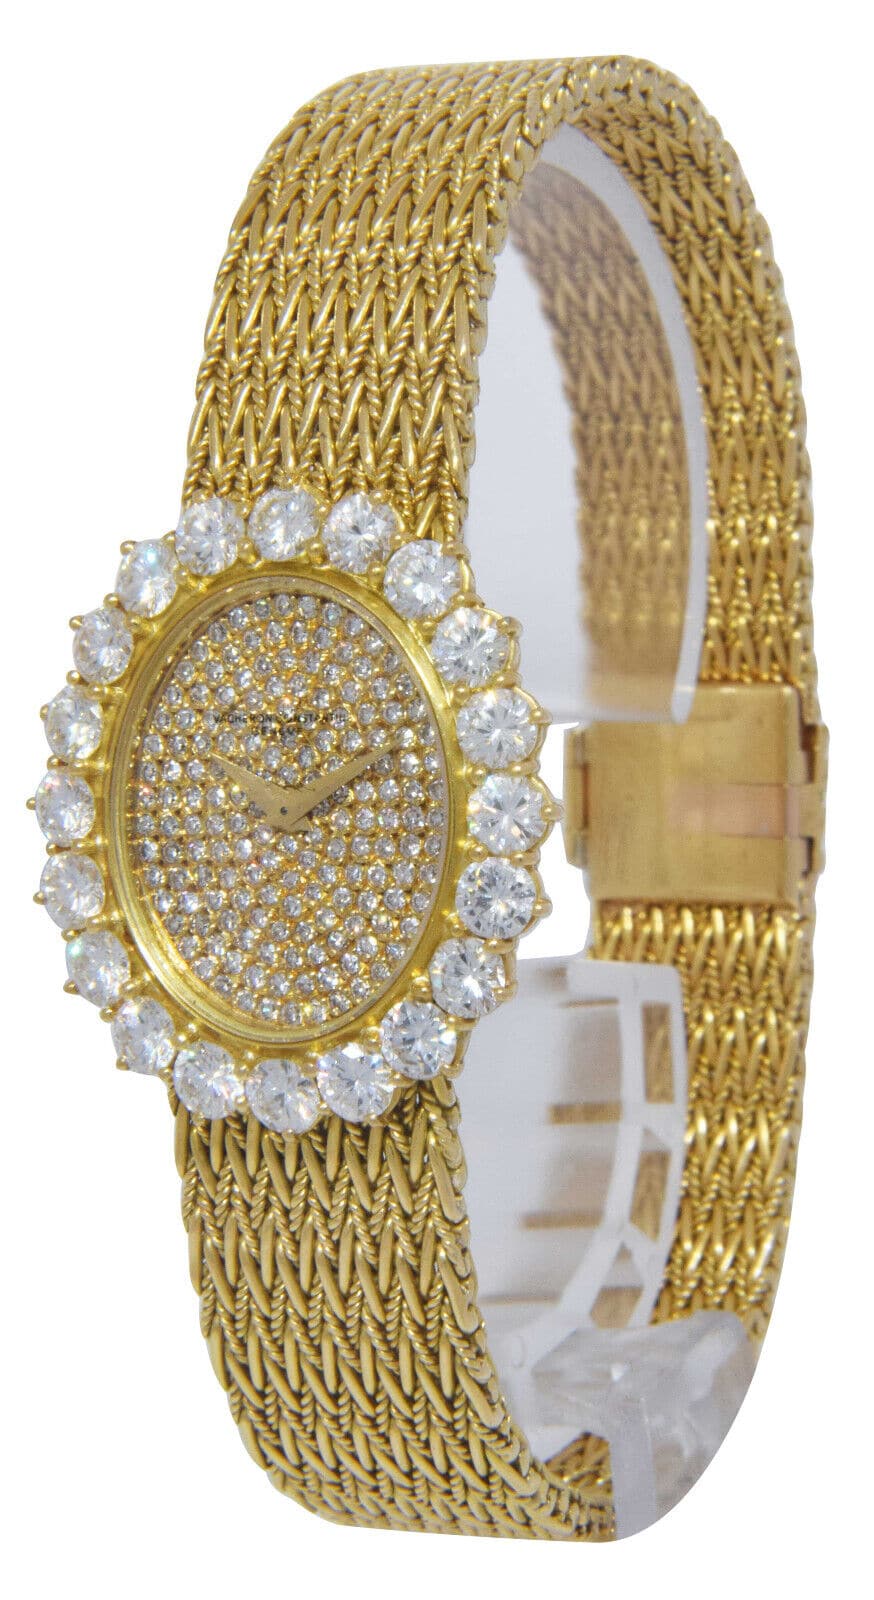 Vacheron Constantin Vintage 18k Yellow Gold  Diamond Ladies 25mm Manual Watch